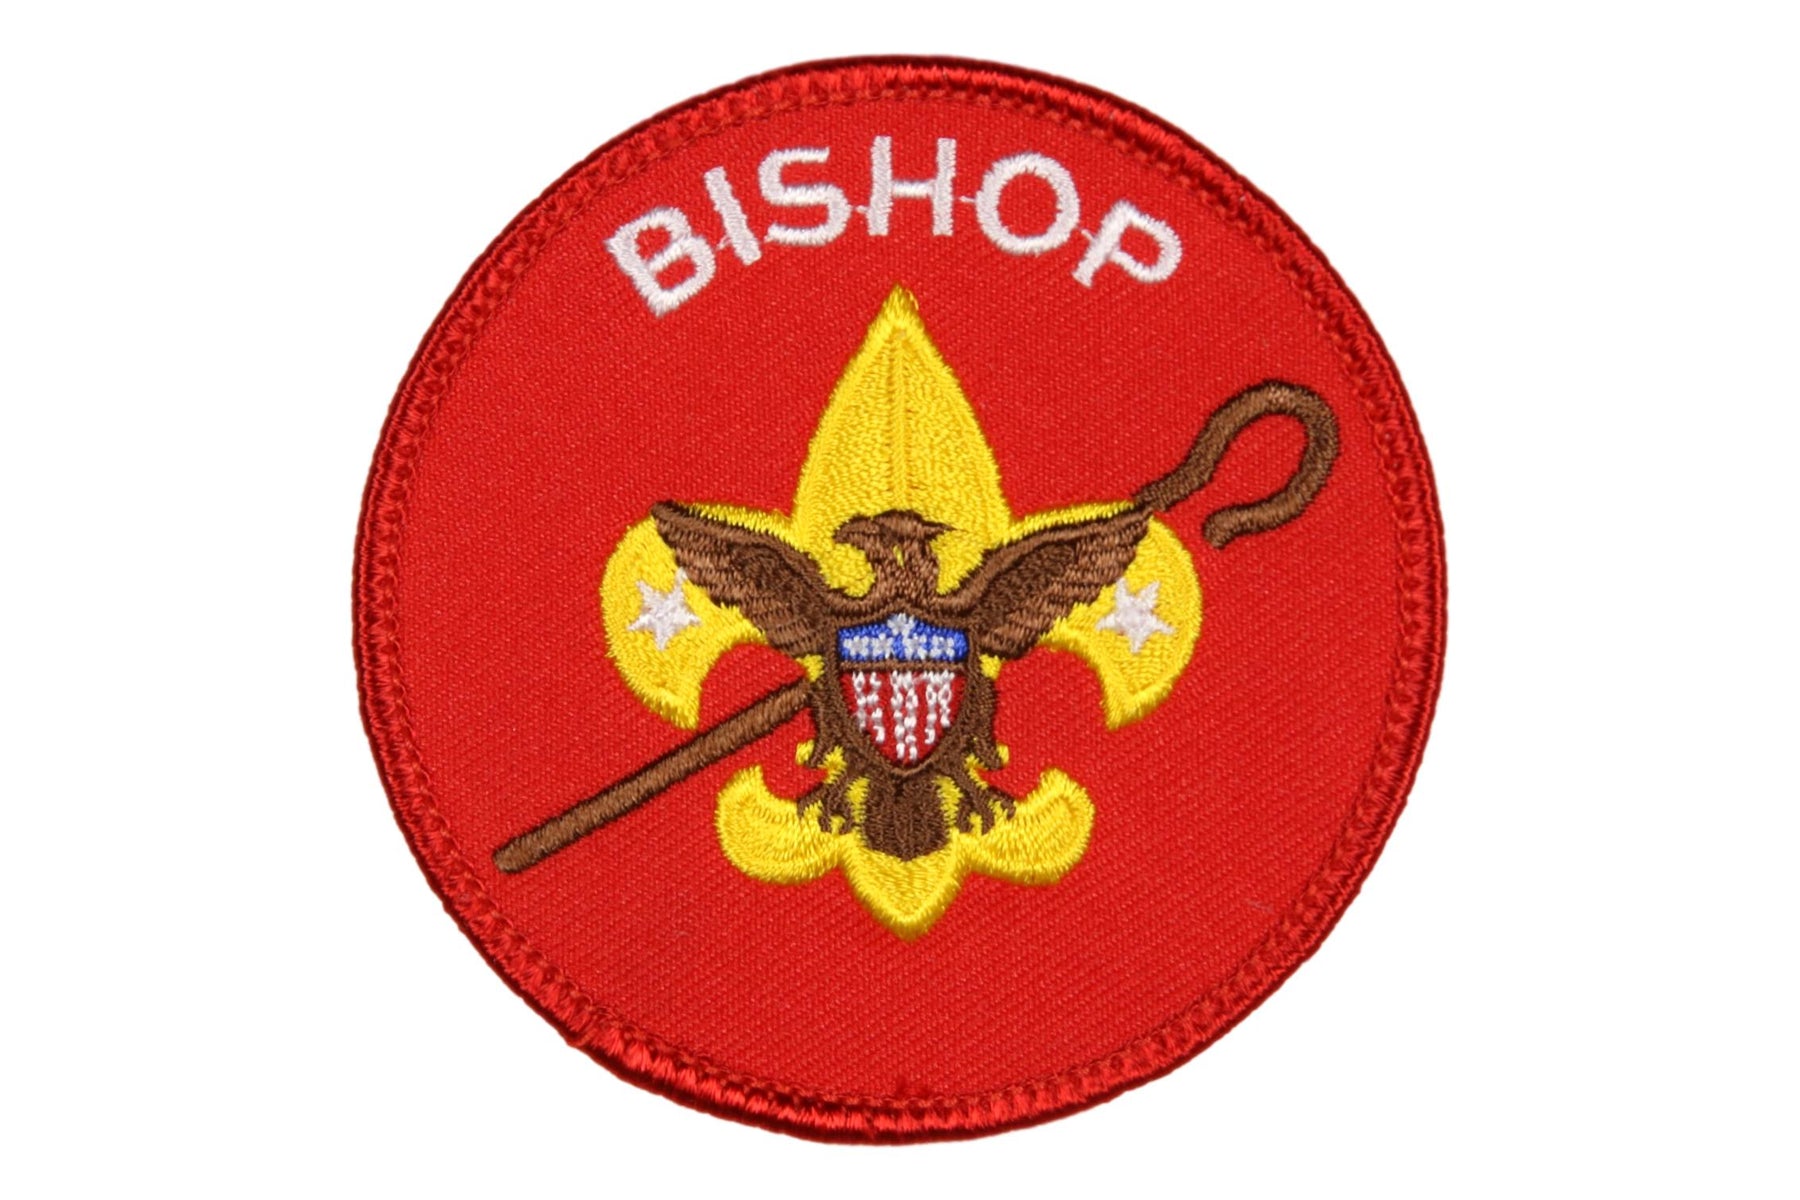 Bishop Patch Red